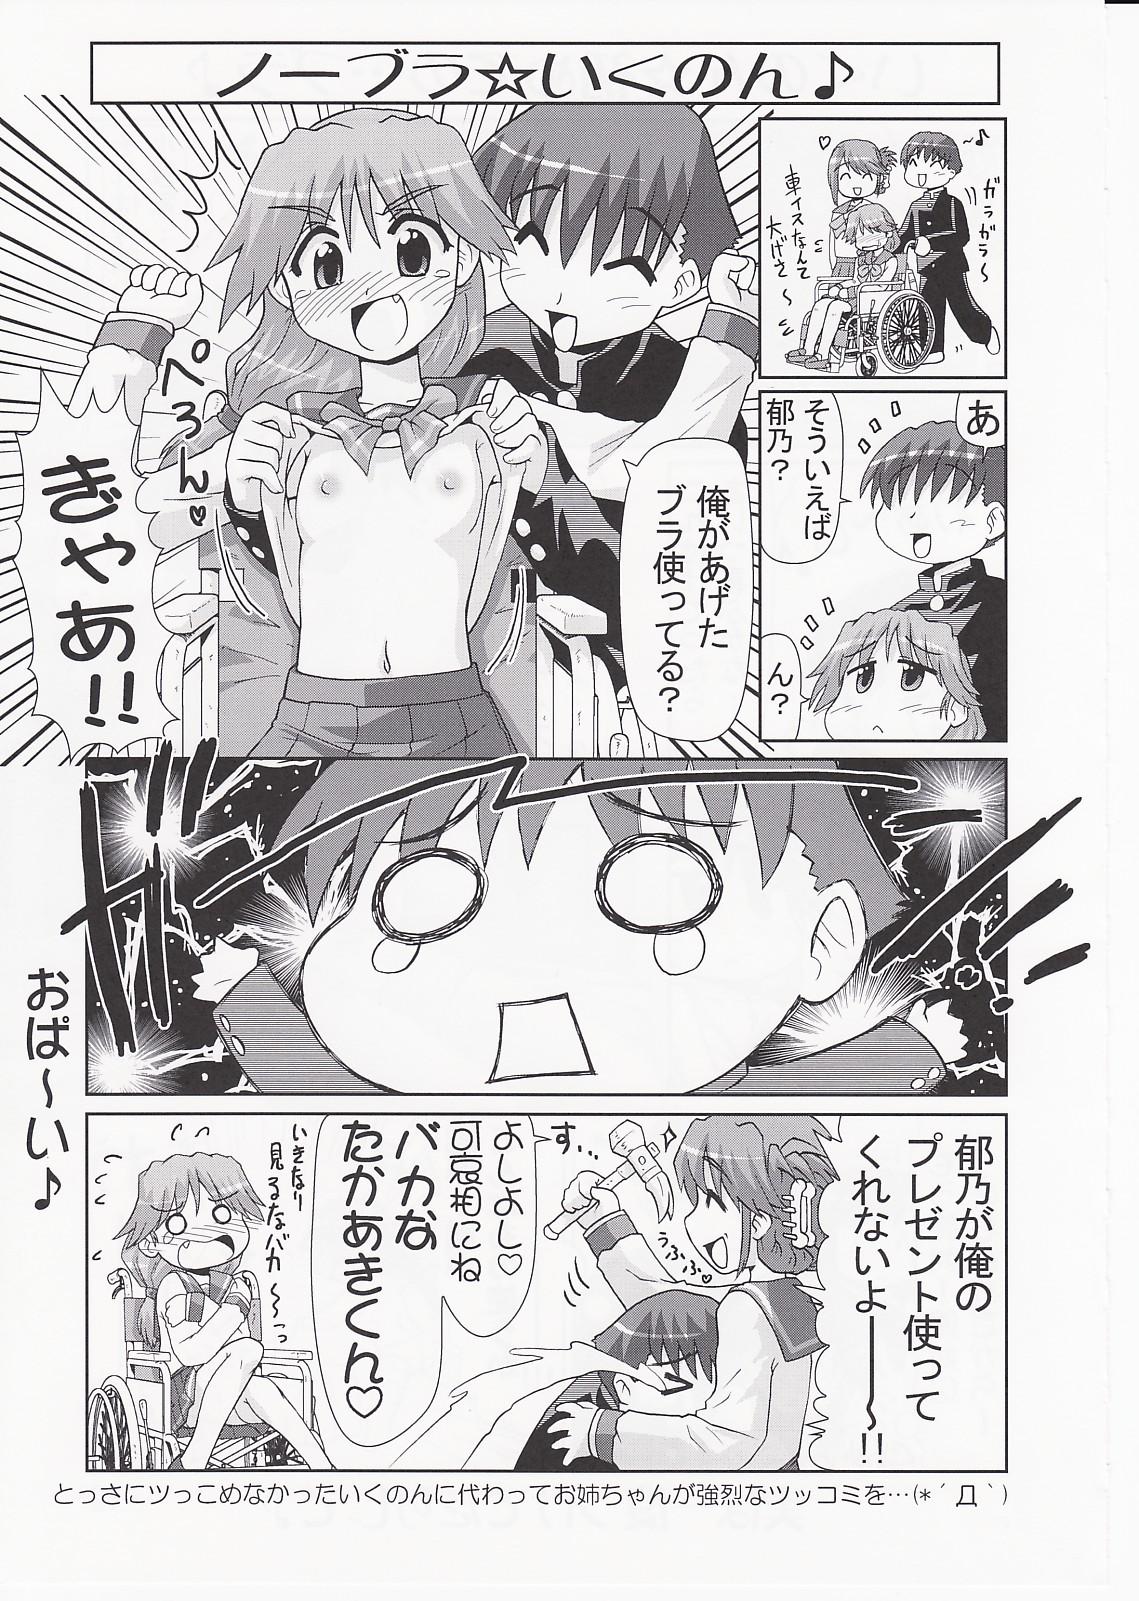 Jizz Ikunon Manga 3 - Toheart2 Kissing - Page 10